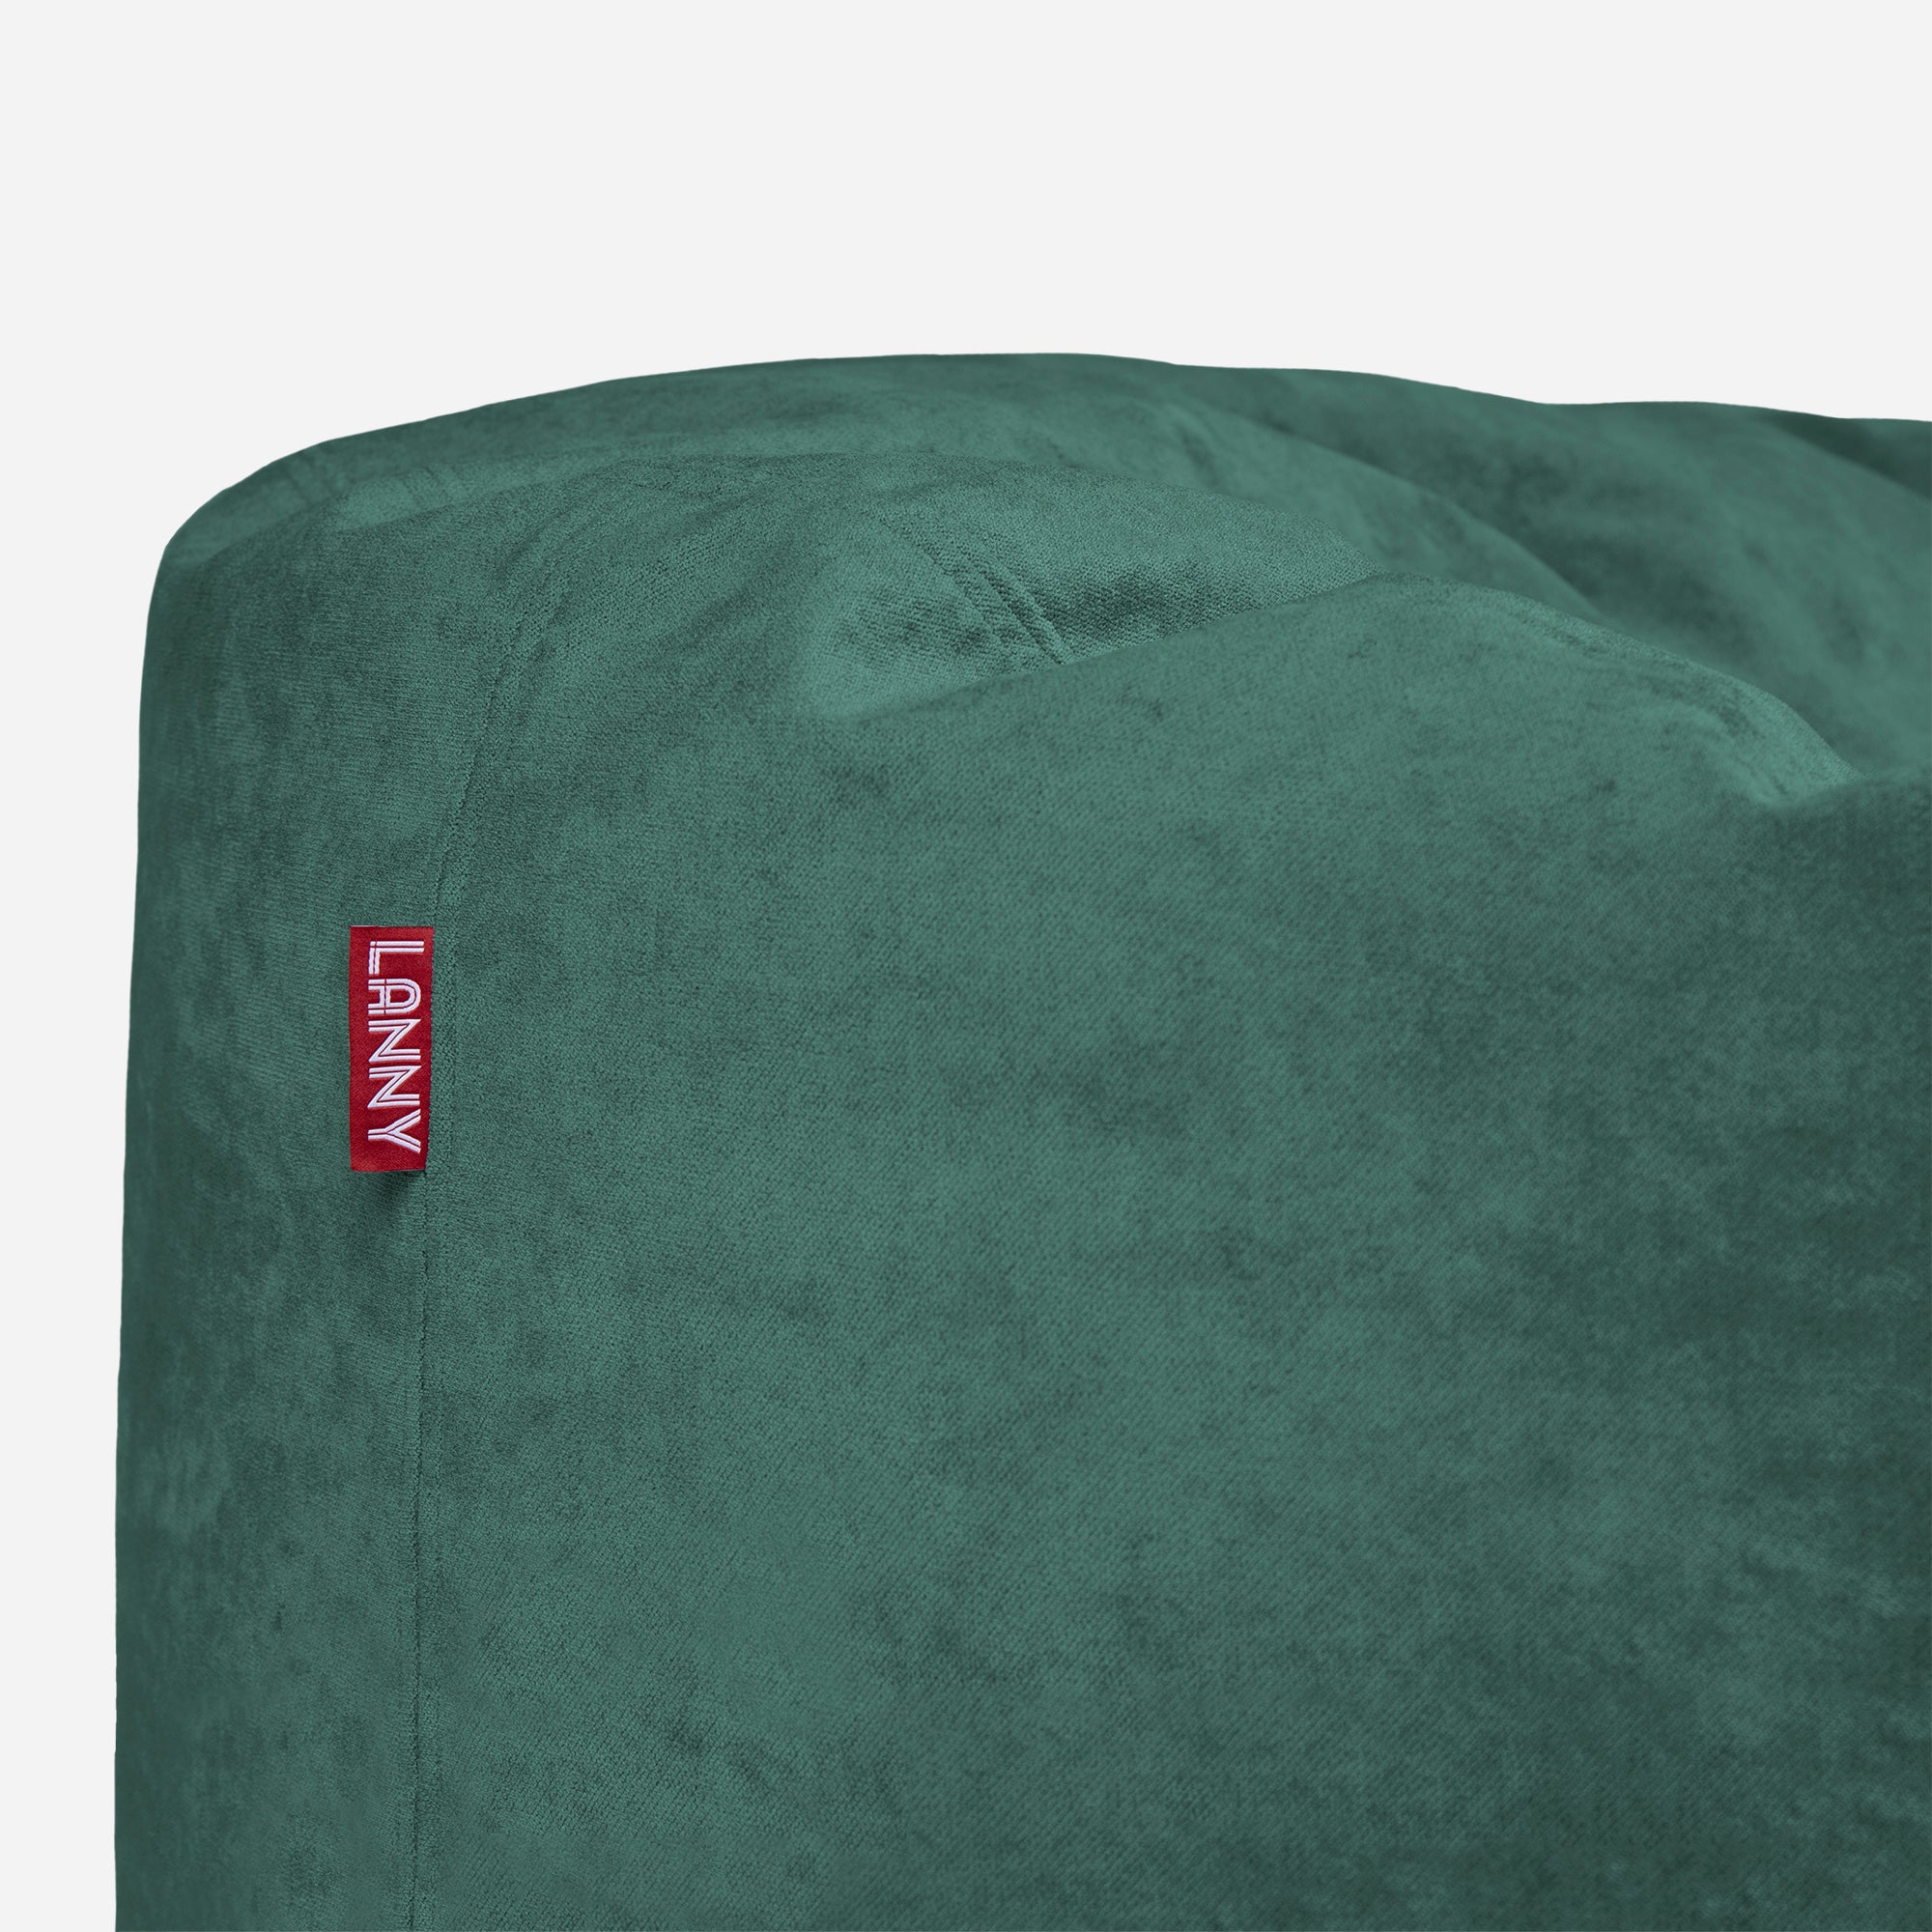 Medium Original Aldo Green Bean Bag